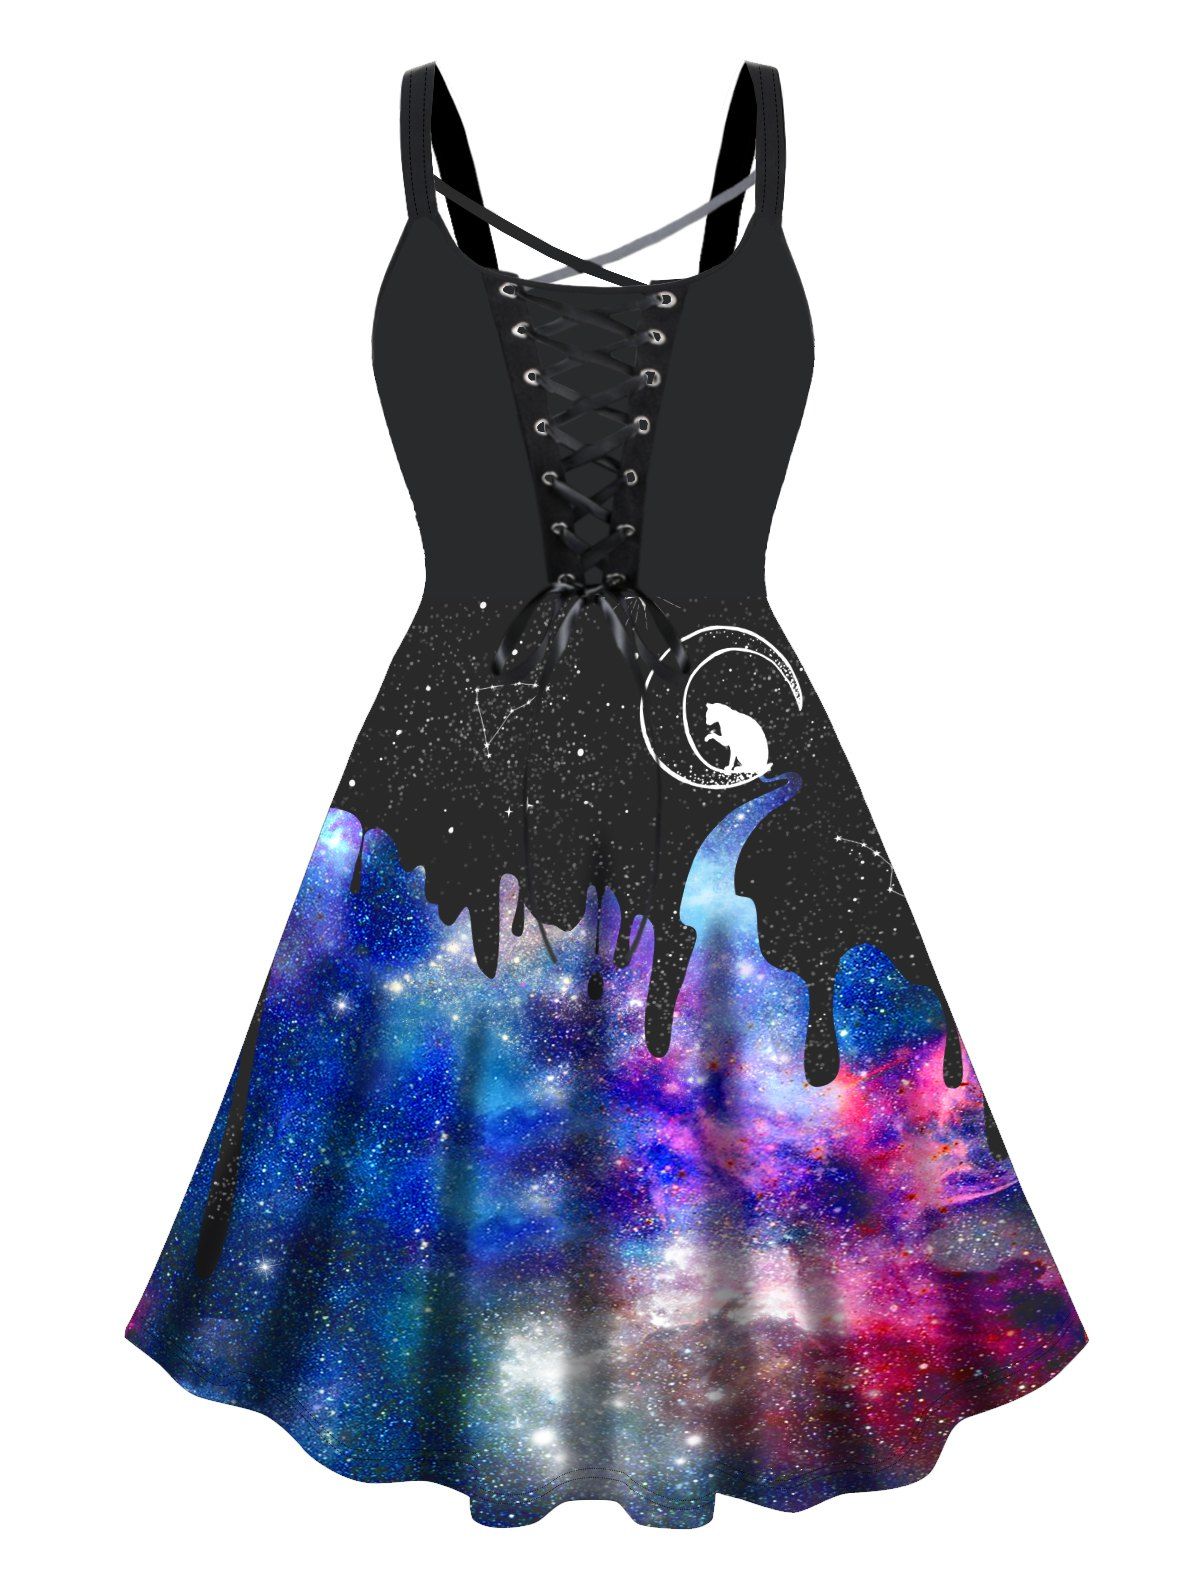 Plus Size Dress Galaxy Print Colorblock Lace Up High Waisted A Line Midi Dress - BLACK 5X